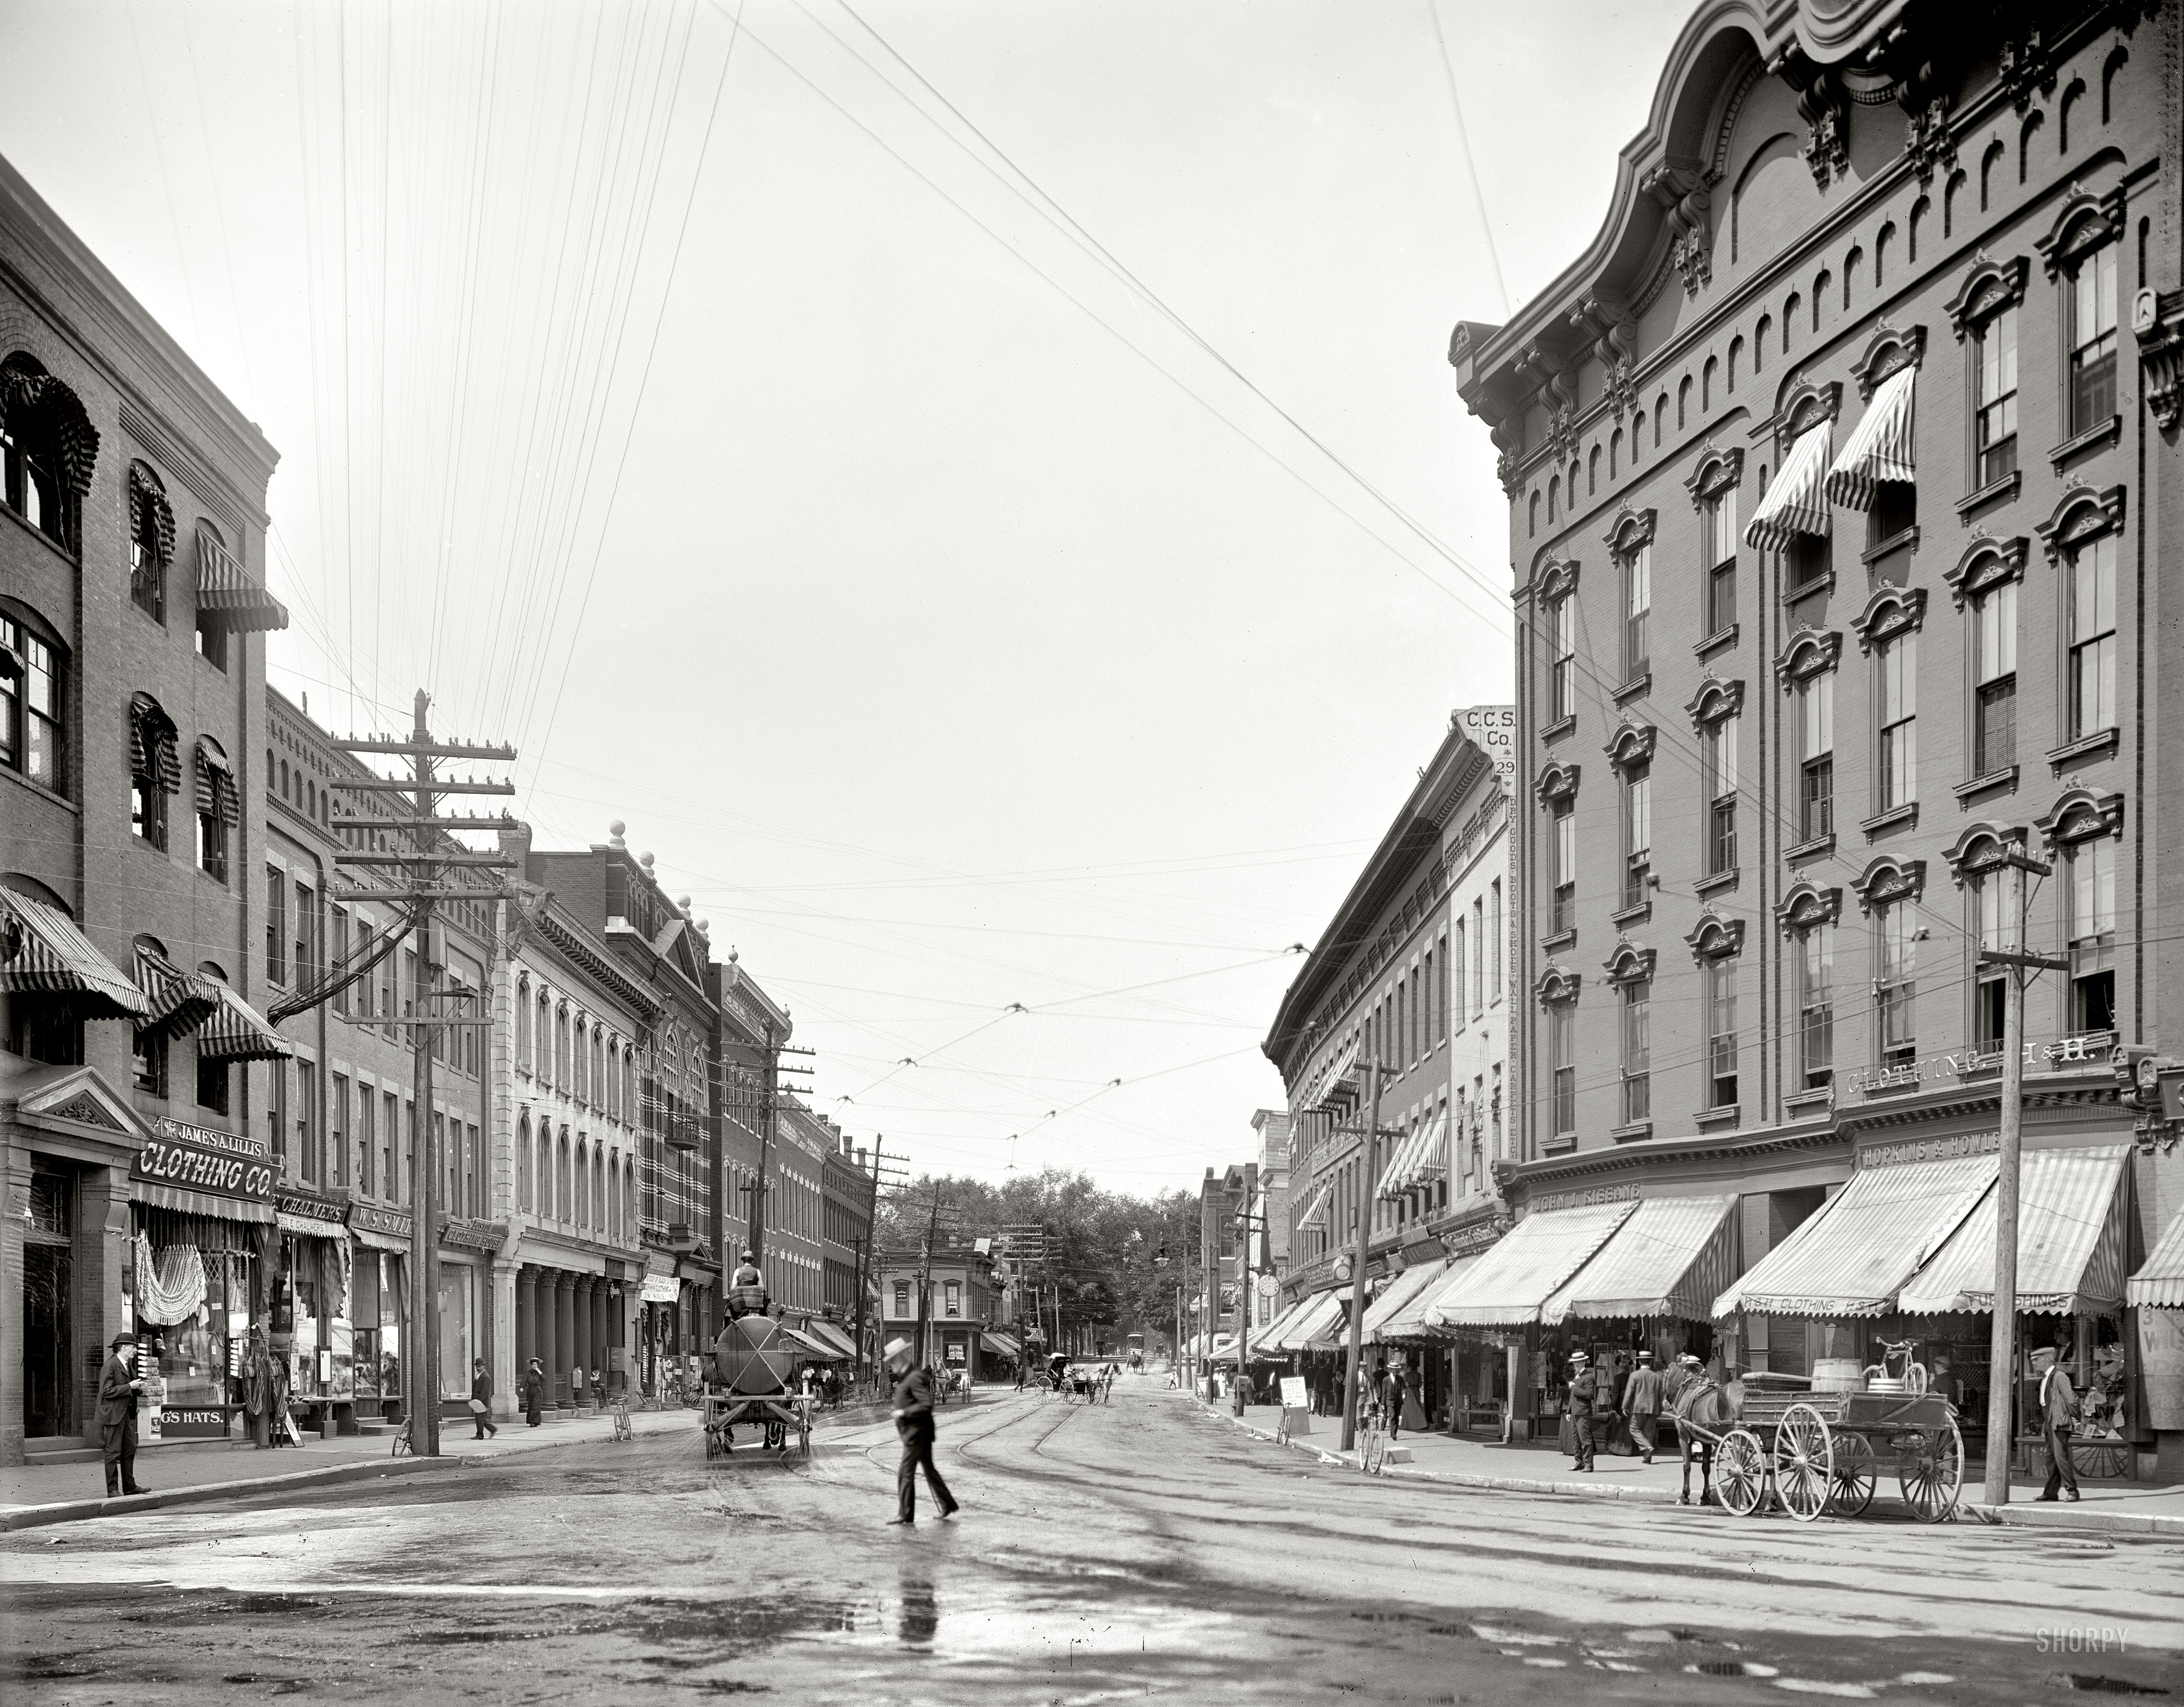 Rutland, Vermont circa 1904. "Merchants' Row." 8x10 inch dry plate glass negative, Detroit Publishing Company. View full size.